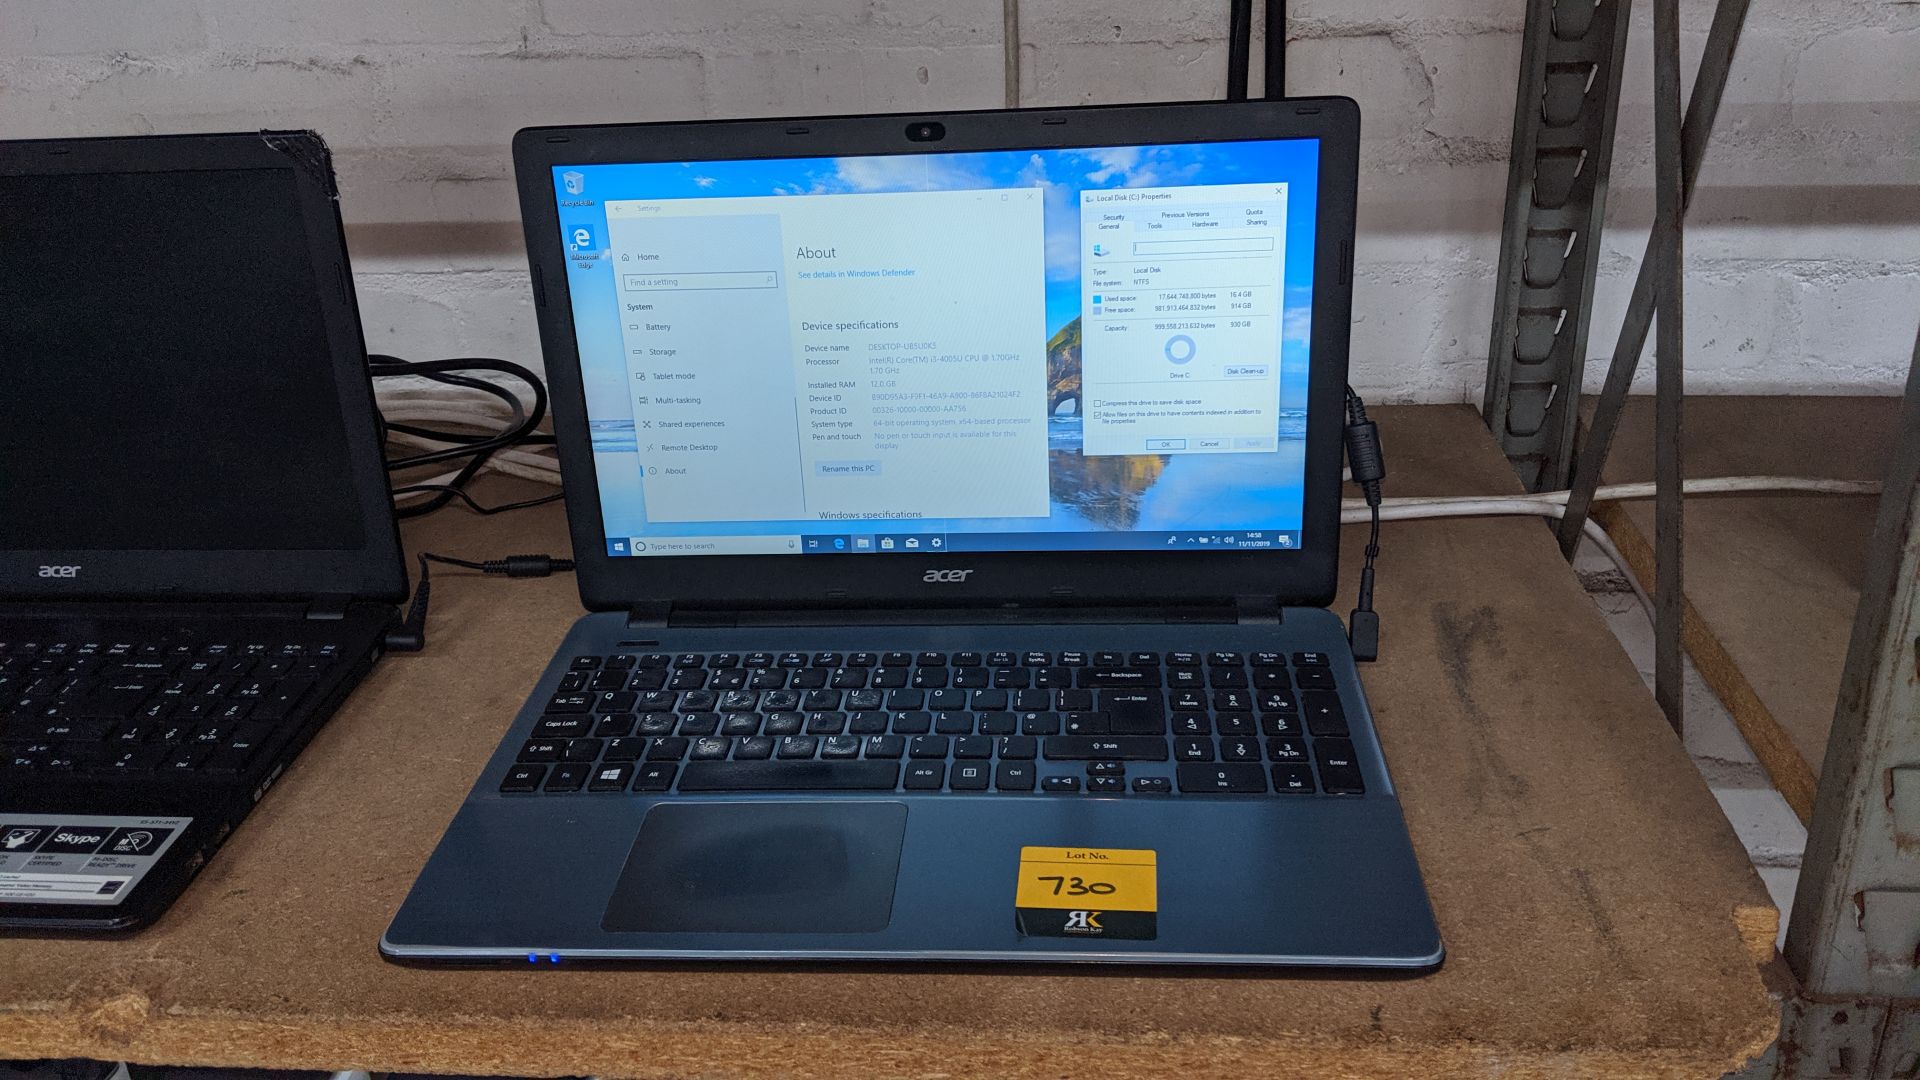 Acer Aspire E15 widescreen notebook computer, Intel Core i3-4005u CPU @1.7GHz, 12Gb RAM, 1Tb HDD - Image 3 of 6